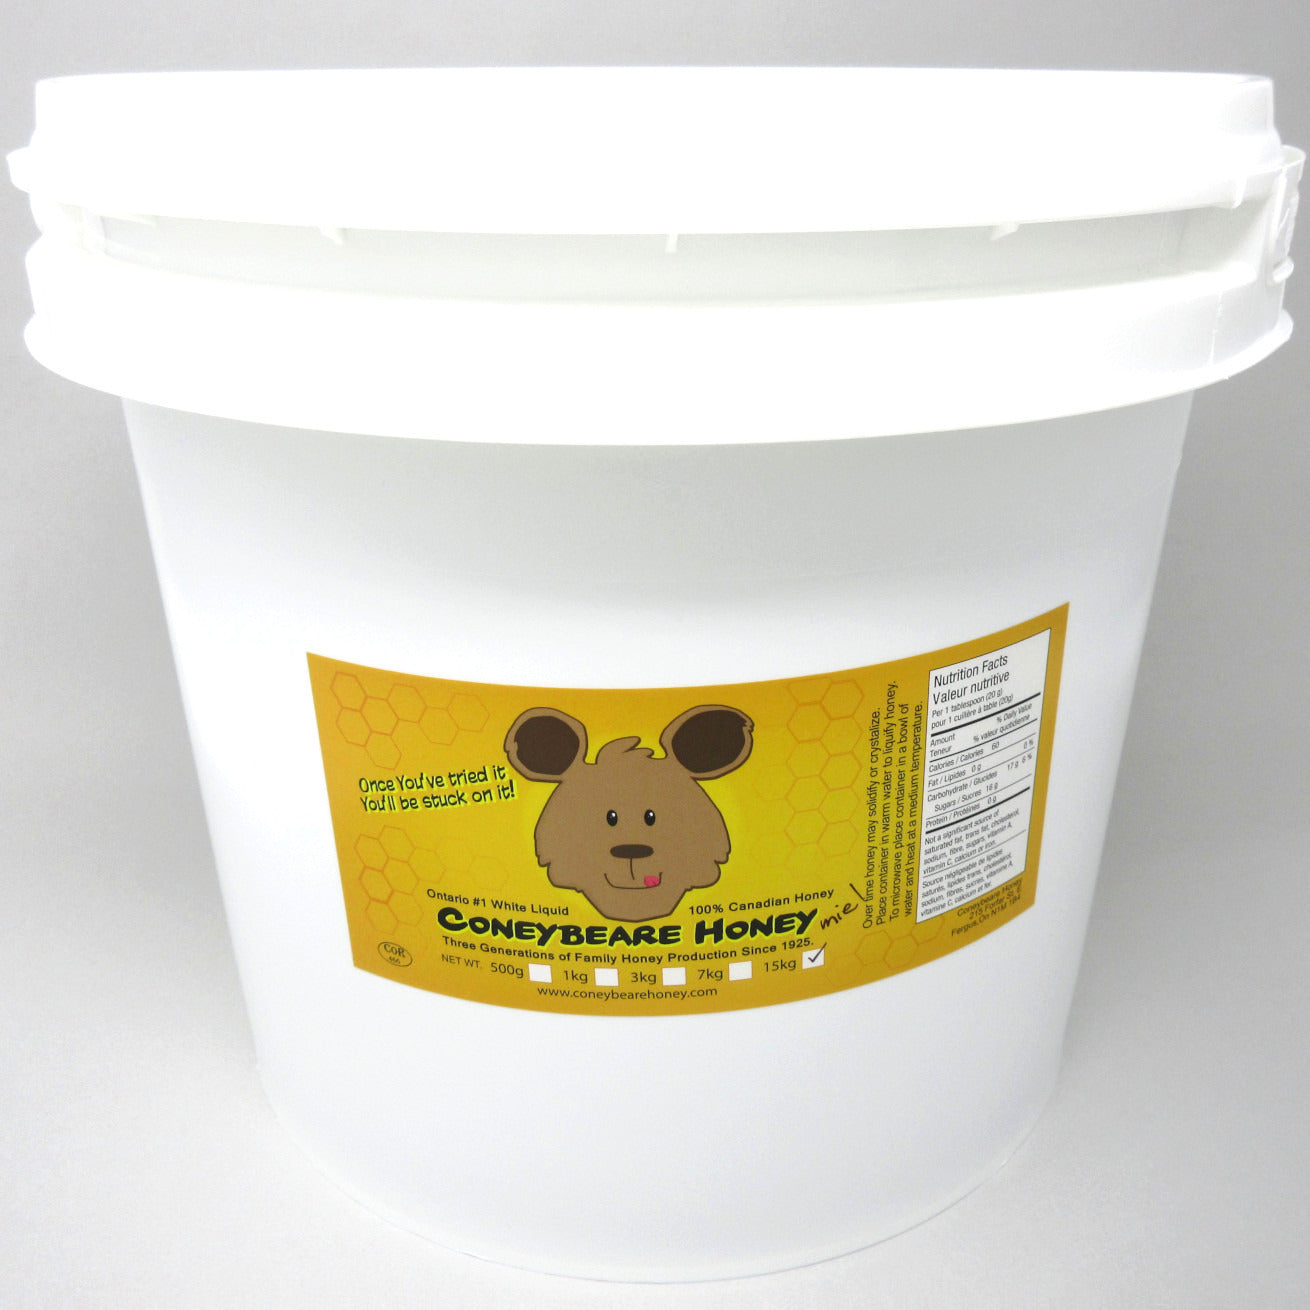 Flour Barrel product image - Coneybeare Honey